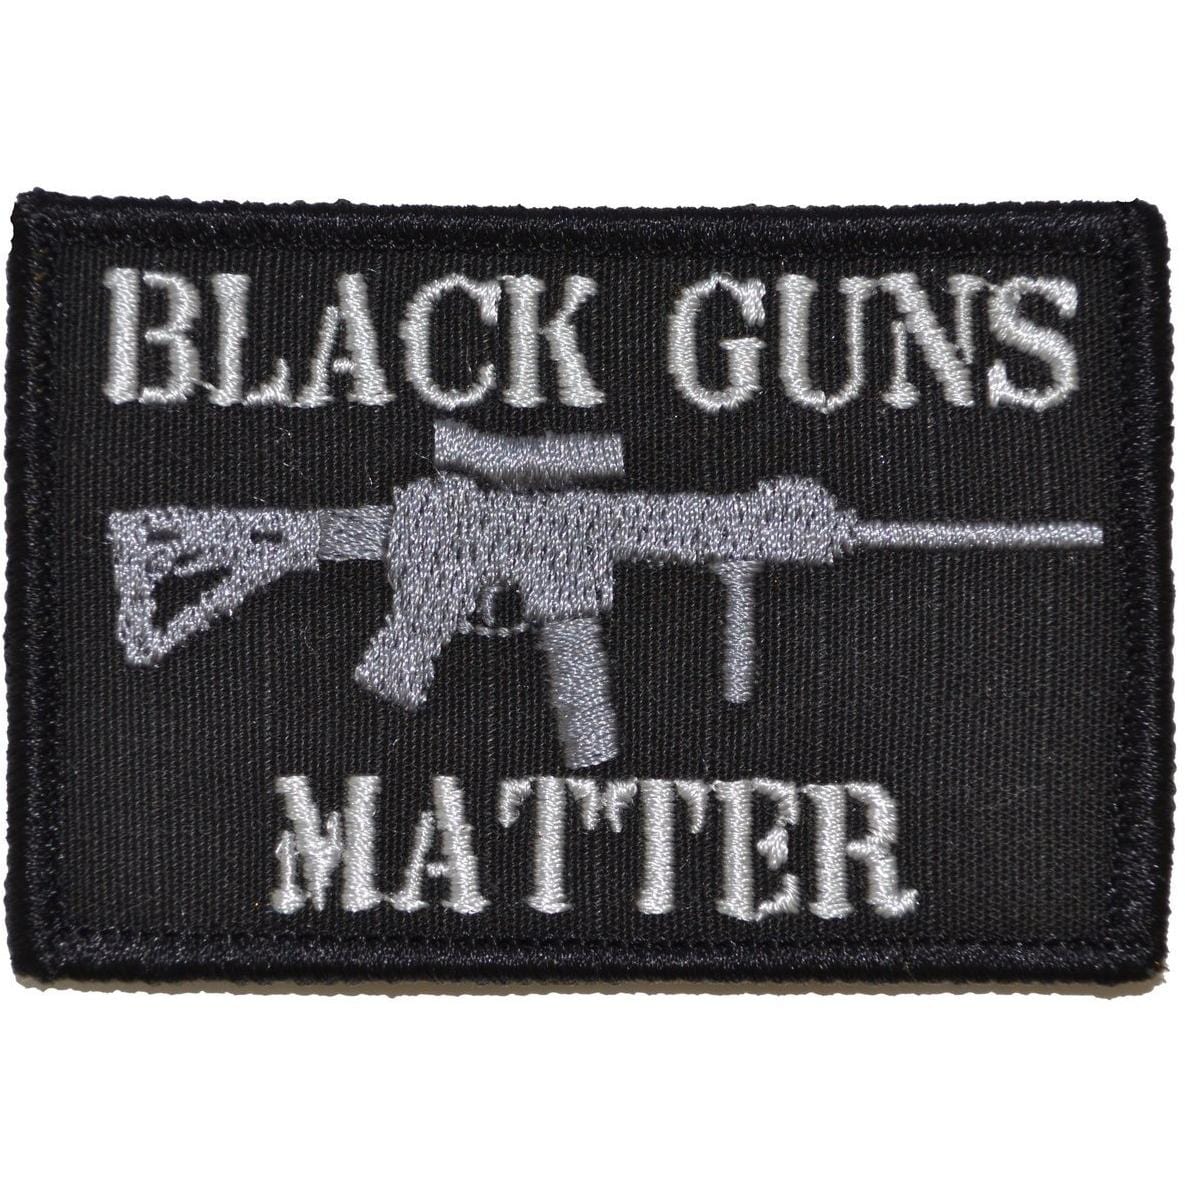 Tactical Gear Junkie Patches Black Black Guns Matter - 2x3 Patch